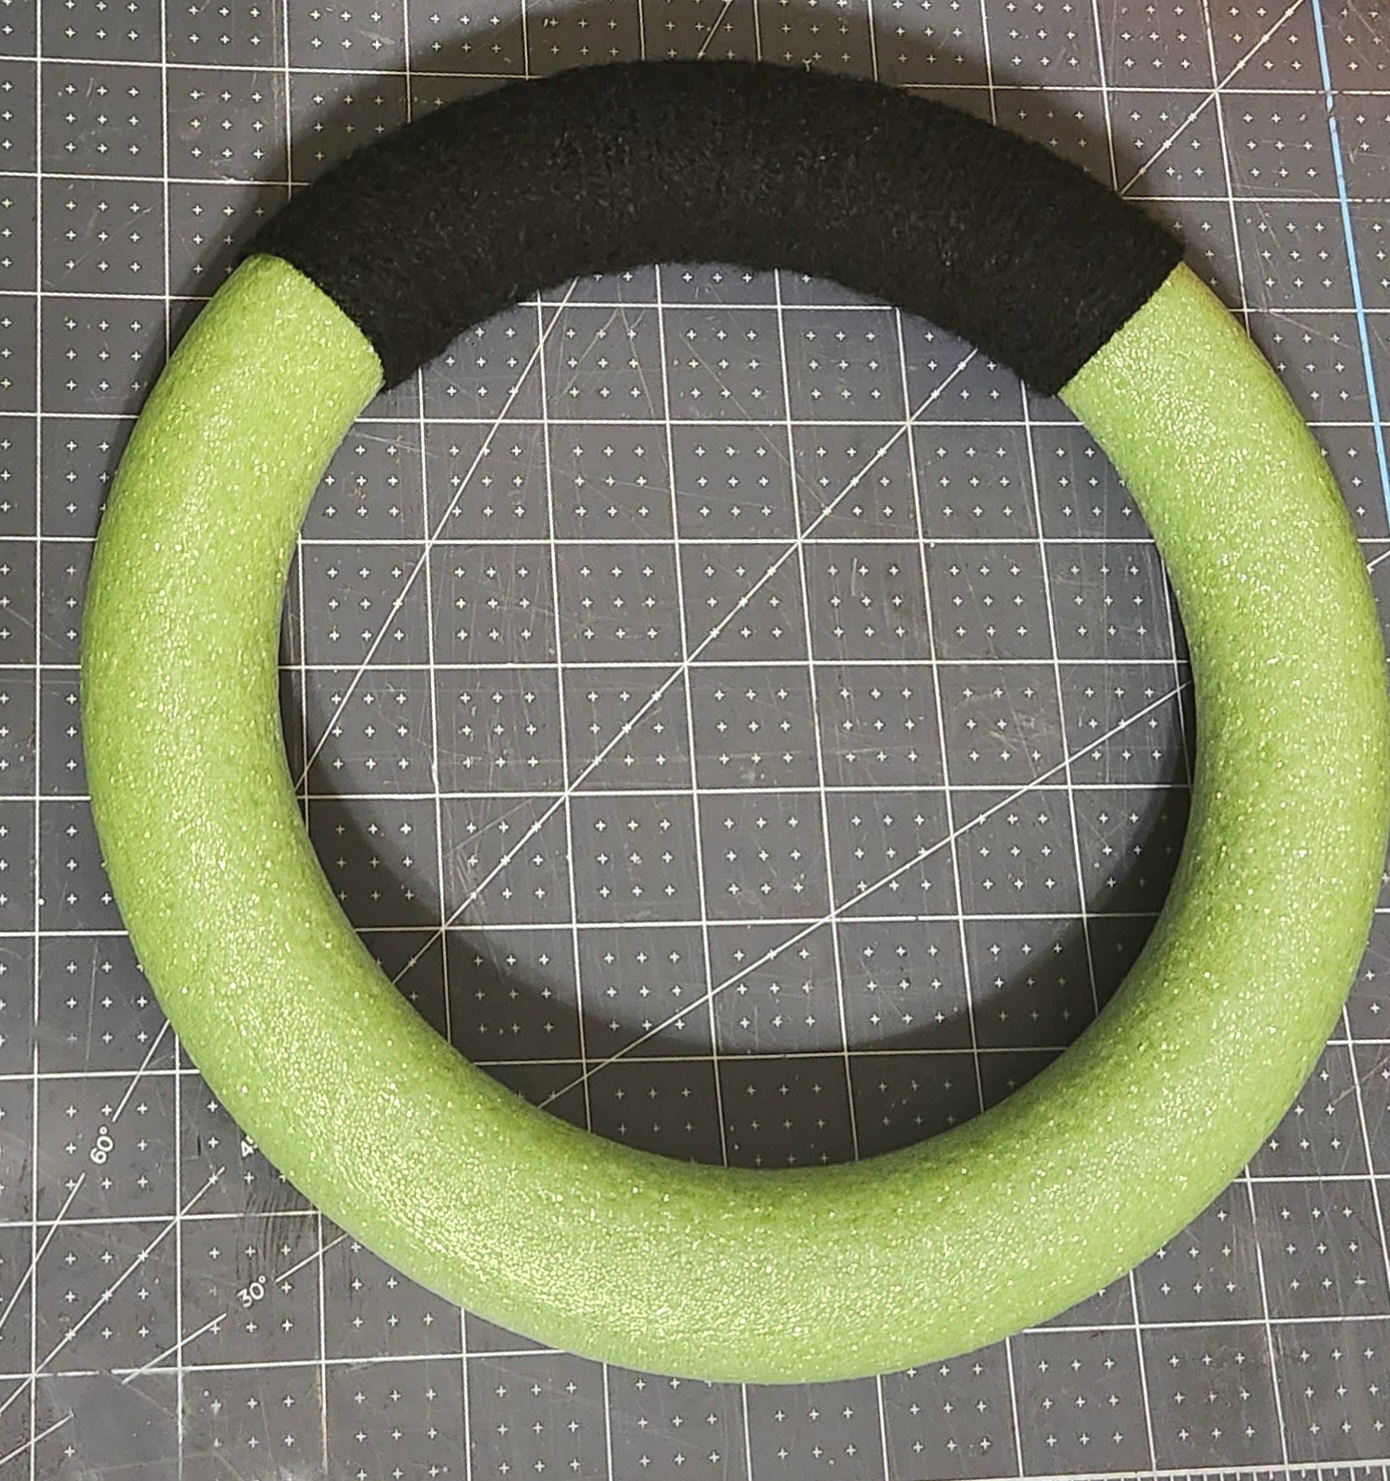 A quarter of a styrofoam wreath form covered with black yarn.